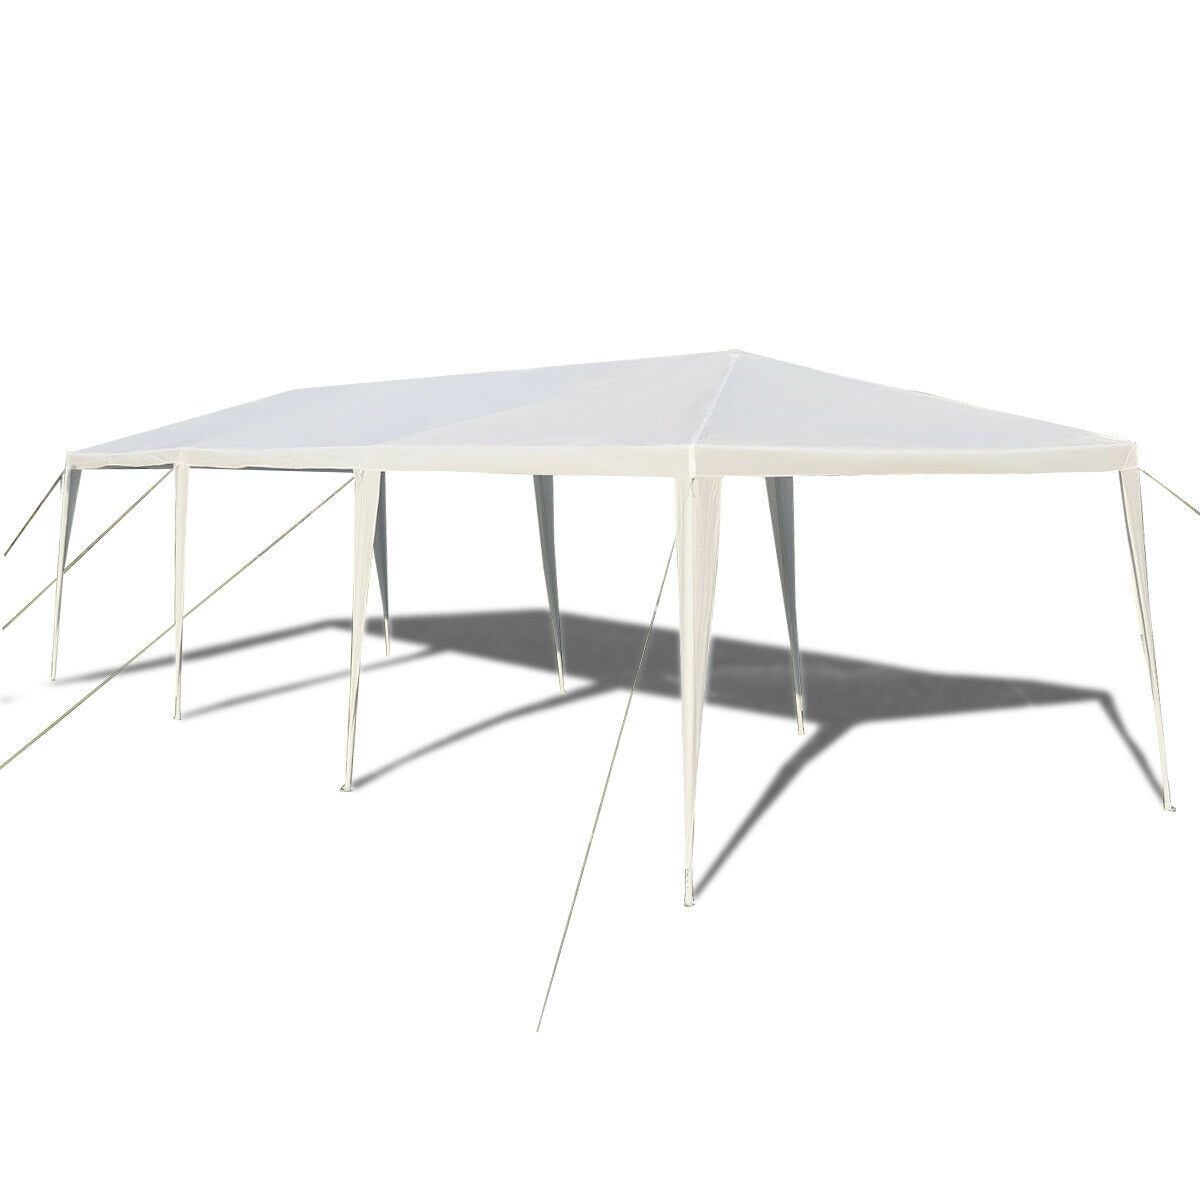 Gymax White 10' x 30' Outdoor Gazebo Canopy Wedding Party Patio Tent ...